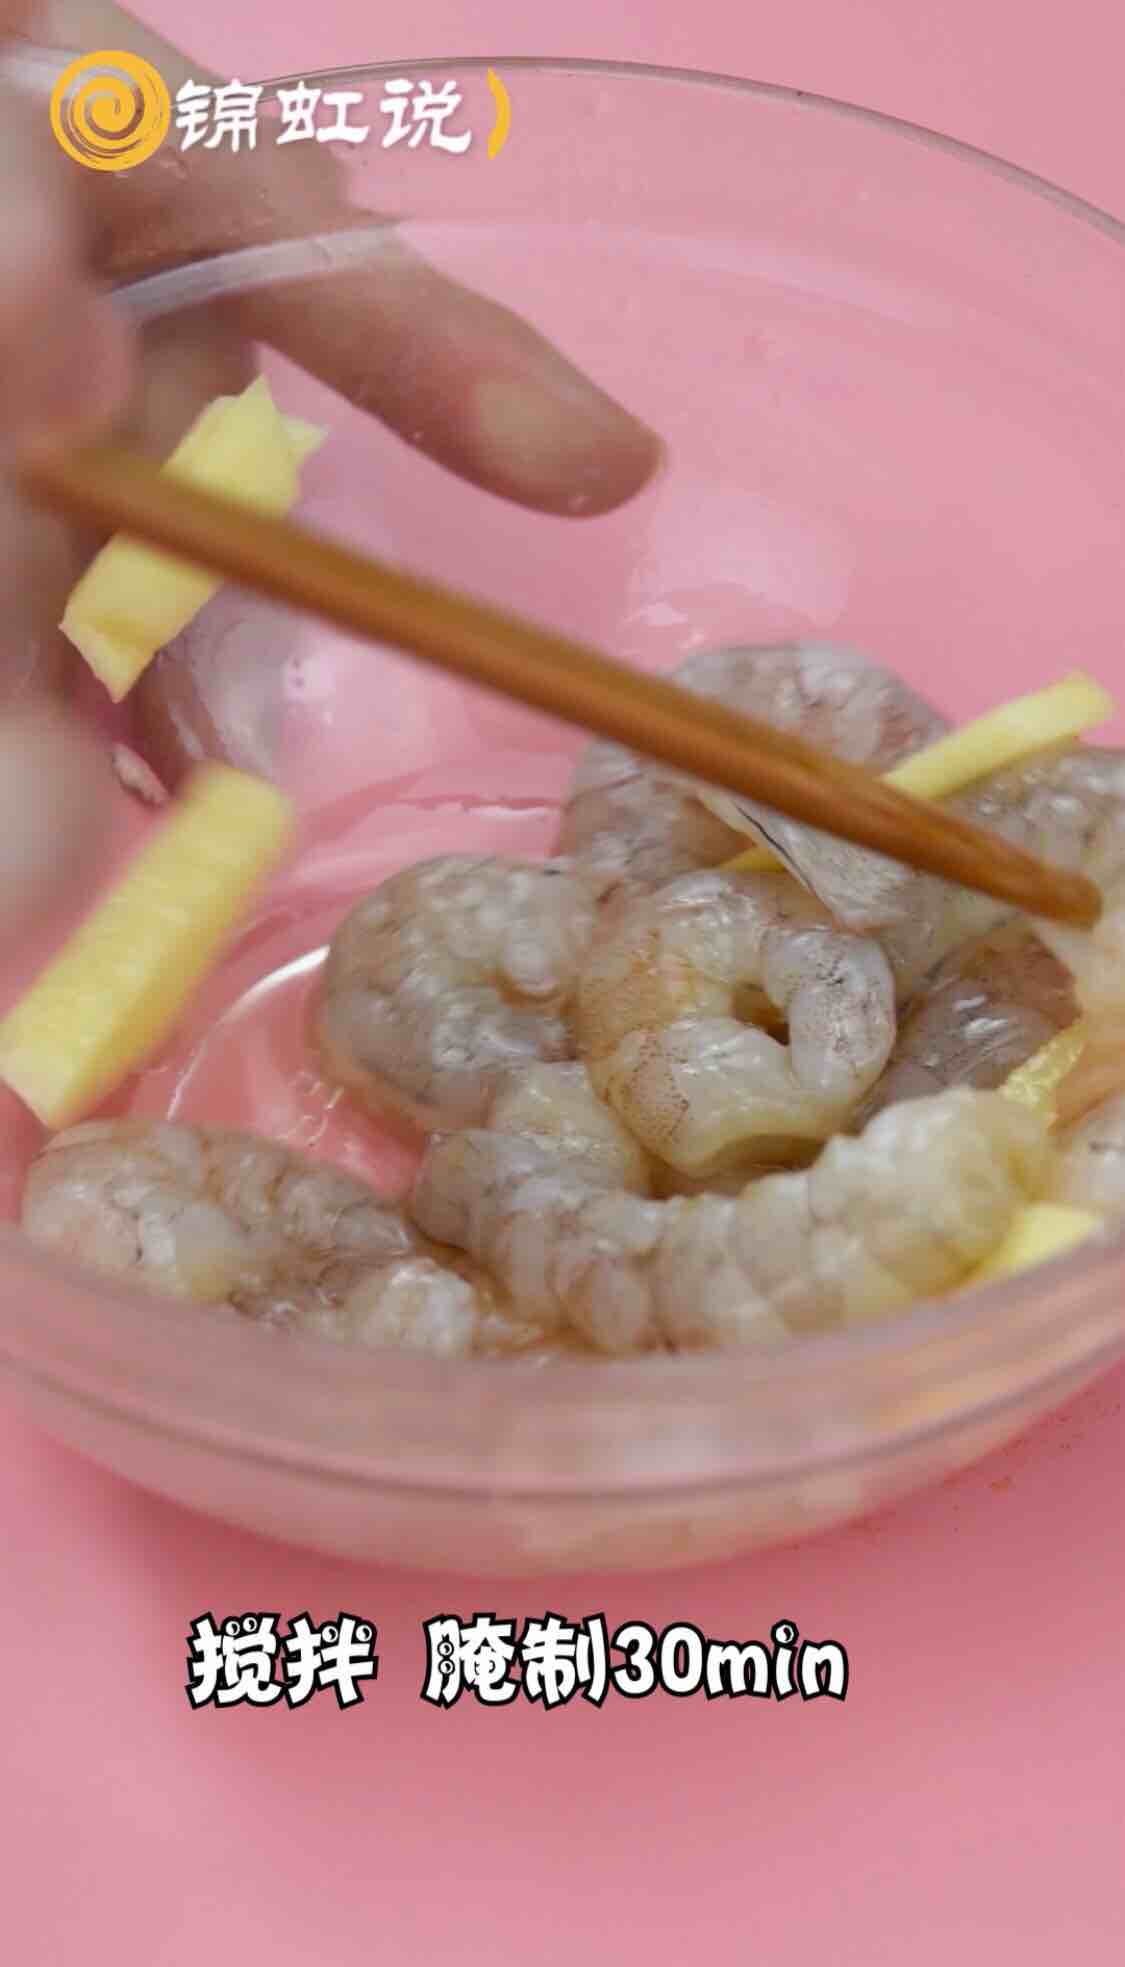 Shrimp Mango Gourmet recipe